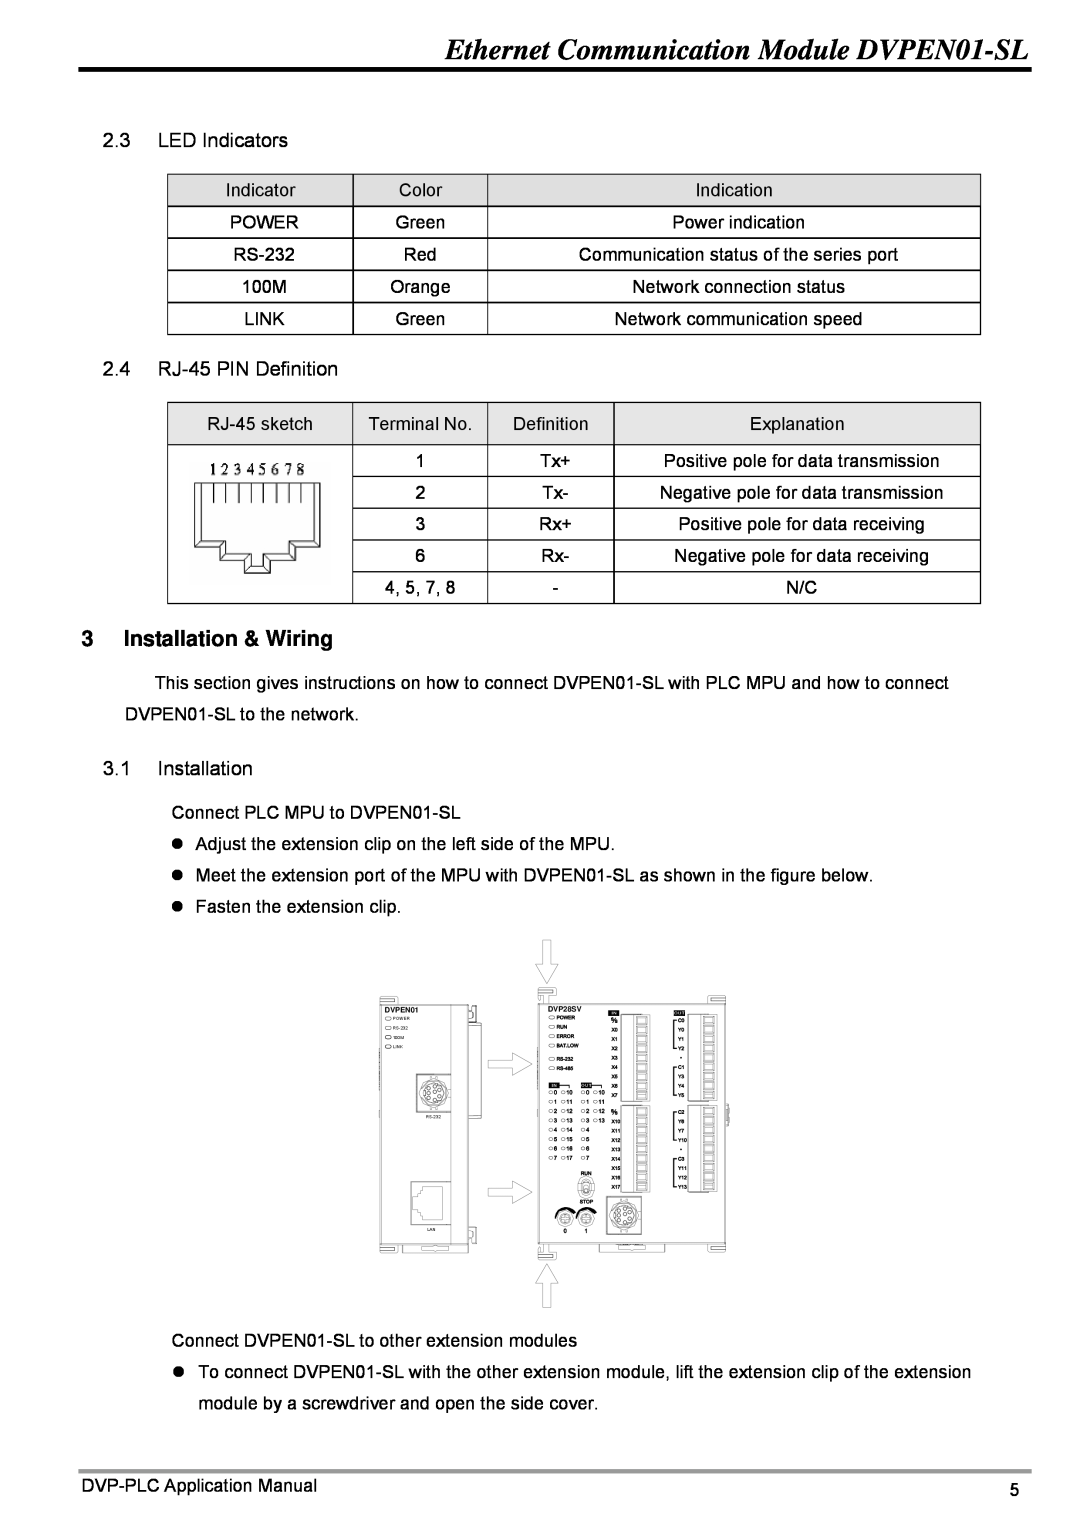 Delta Electronics manual Installation & Wiring, Ethernet Communication Module DVPEN01-SL, LED Indicators 